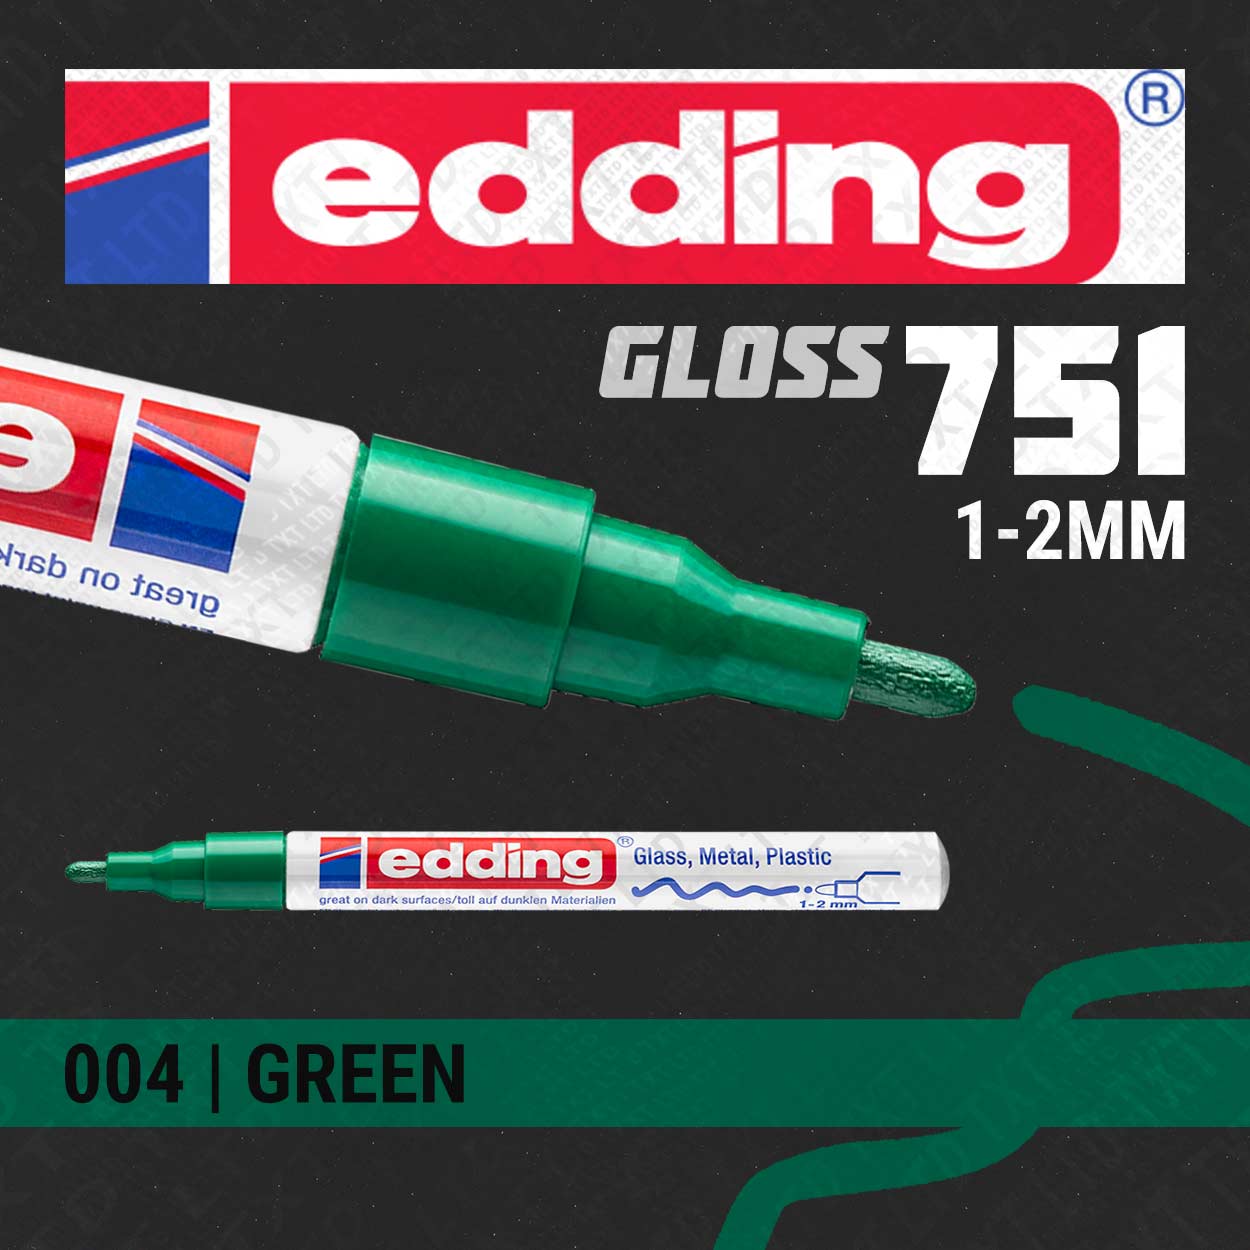 edding 751 Gloss Paint Marker 1-2mm